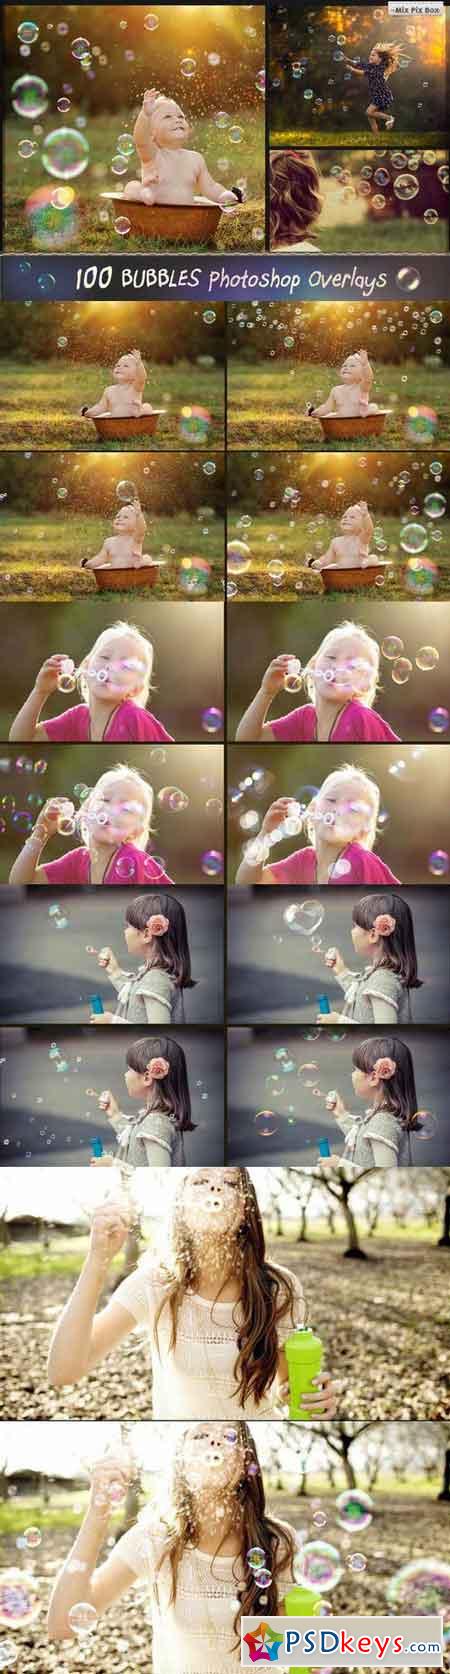 100 Bubbles Photoshop Overlays 617088